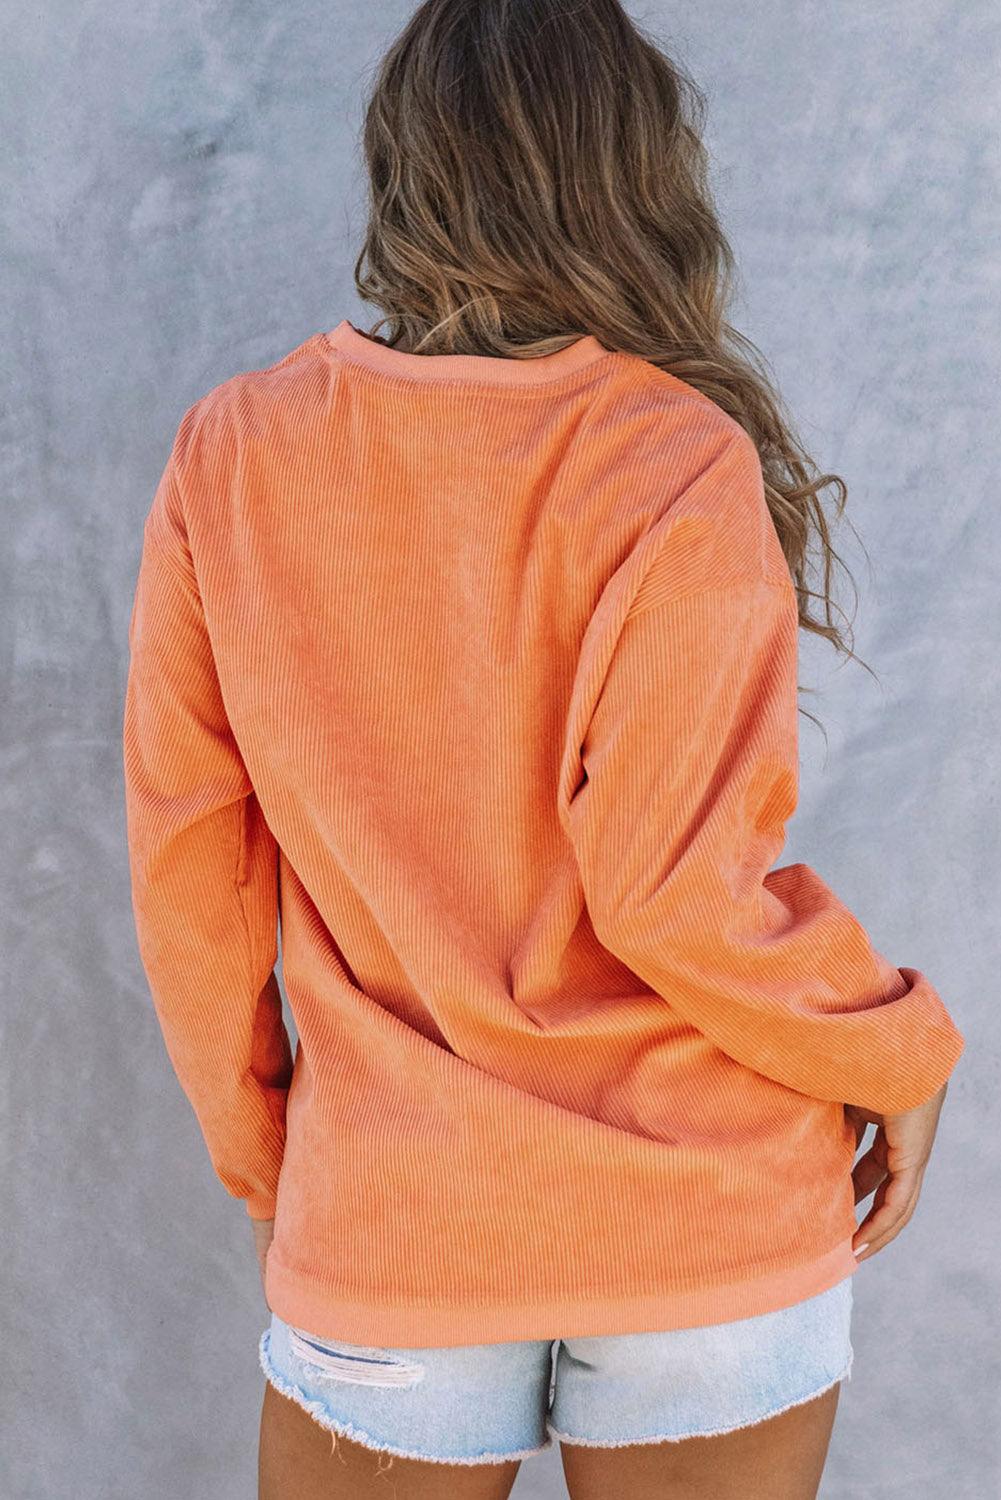 Orange Howdy Pumpkin Halloween Graphic Corded Sweatshirt - L & M Kee, LLC